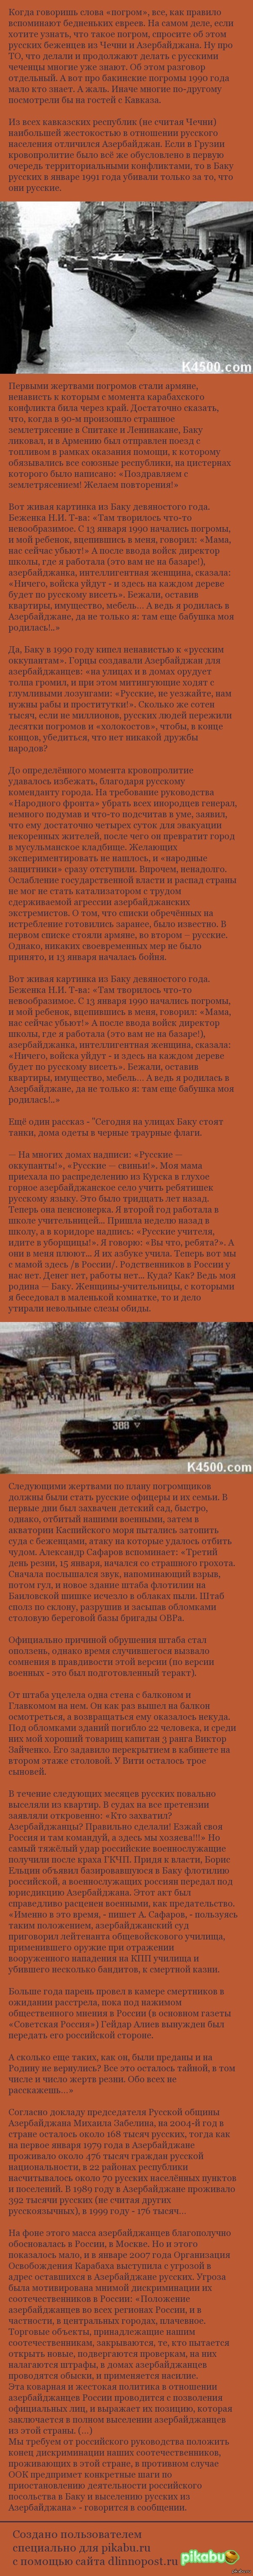     .            .   : http://k4500.com/news/2458-genocid-russkix-v-baku.html